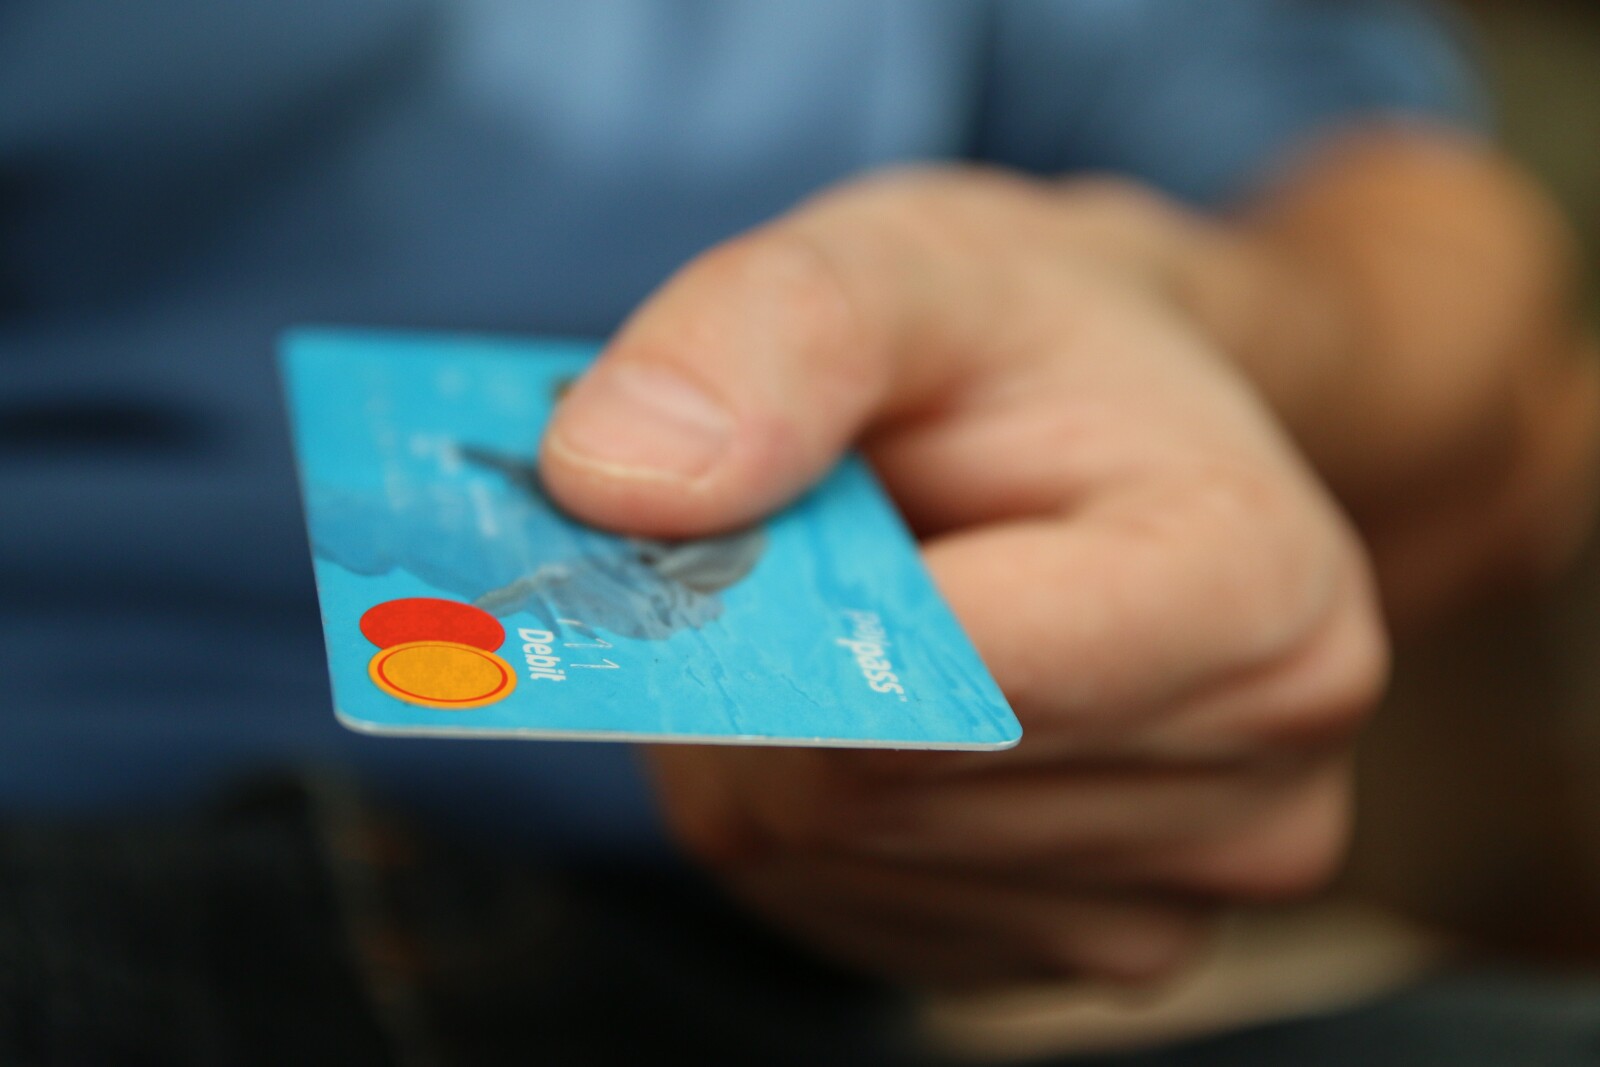 The Silent Culprit: How Higher Interest Rates Fuel the Credit Card Debt Spiral